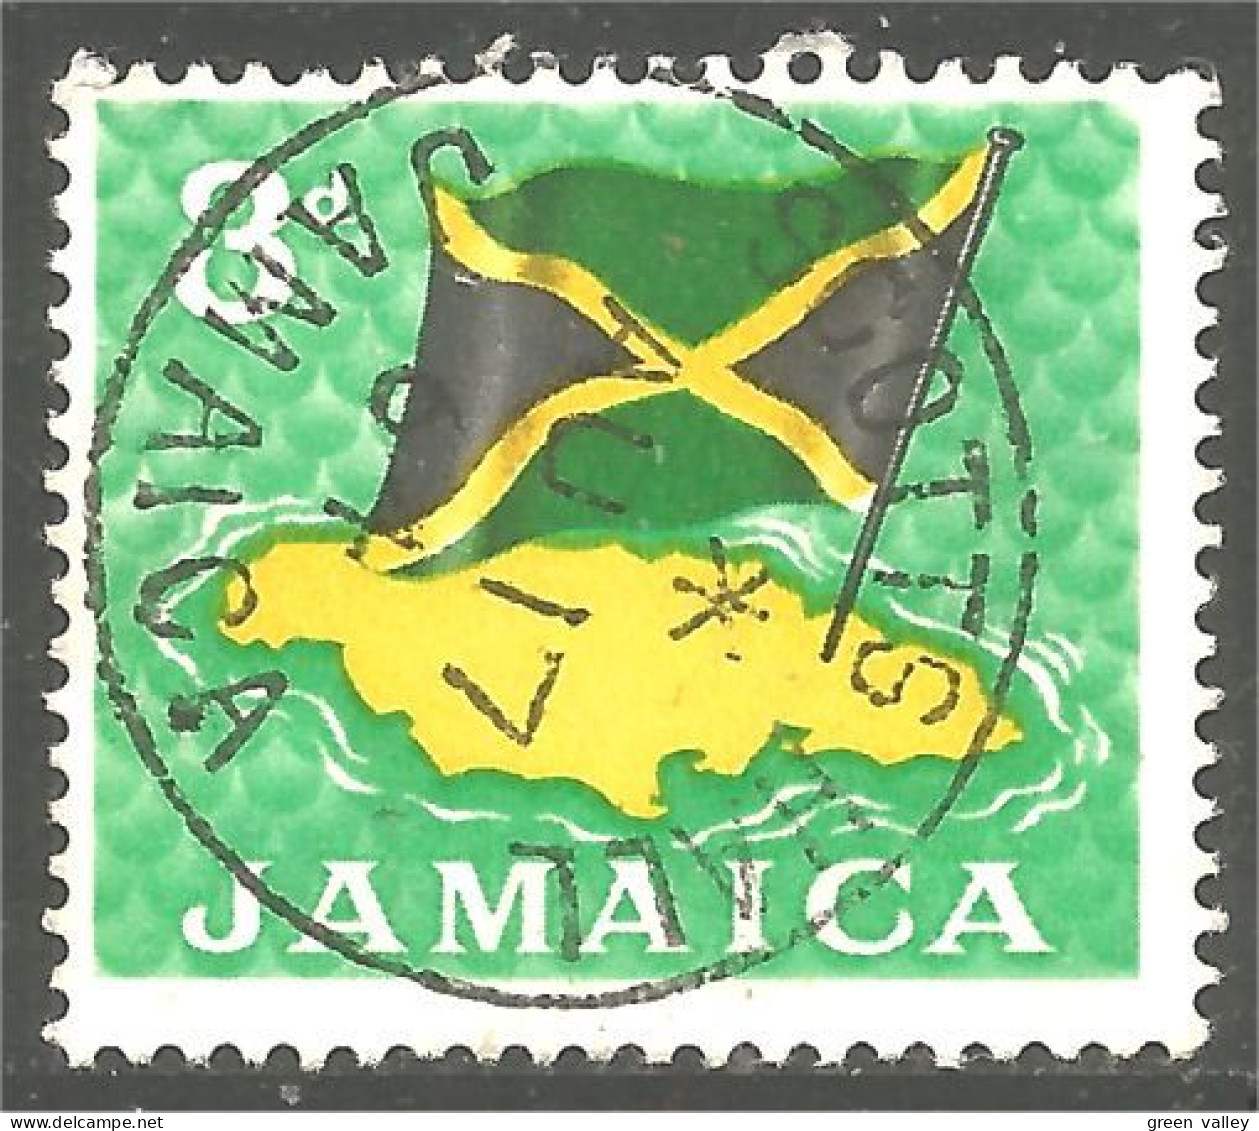 Ca-18 Jamaica Carte Pays Drapeau Iles Islands Flag Country Map Cartina Karte Mapa Kaart - Géographie